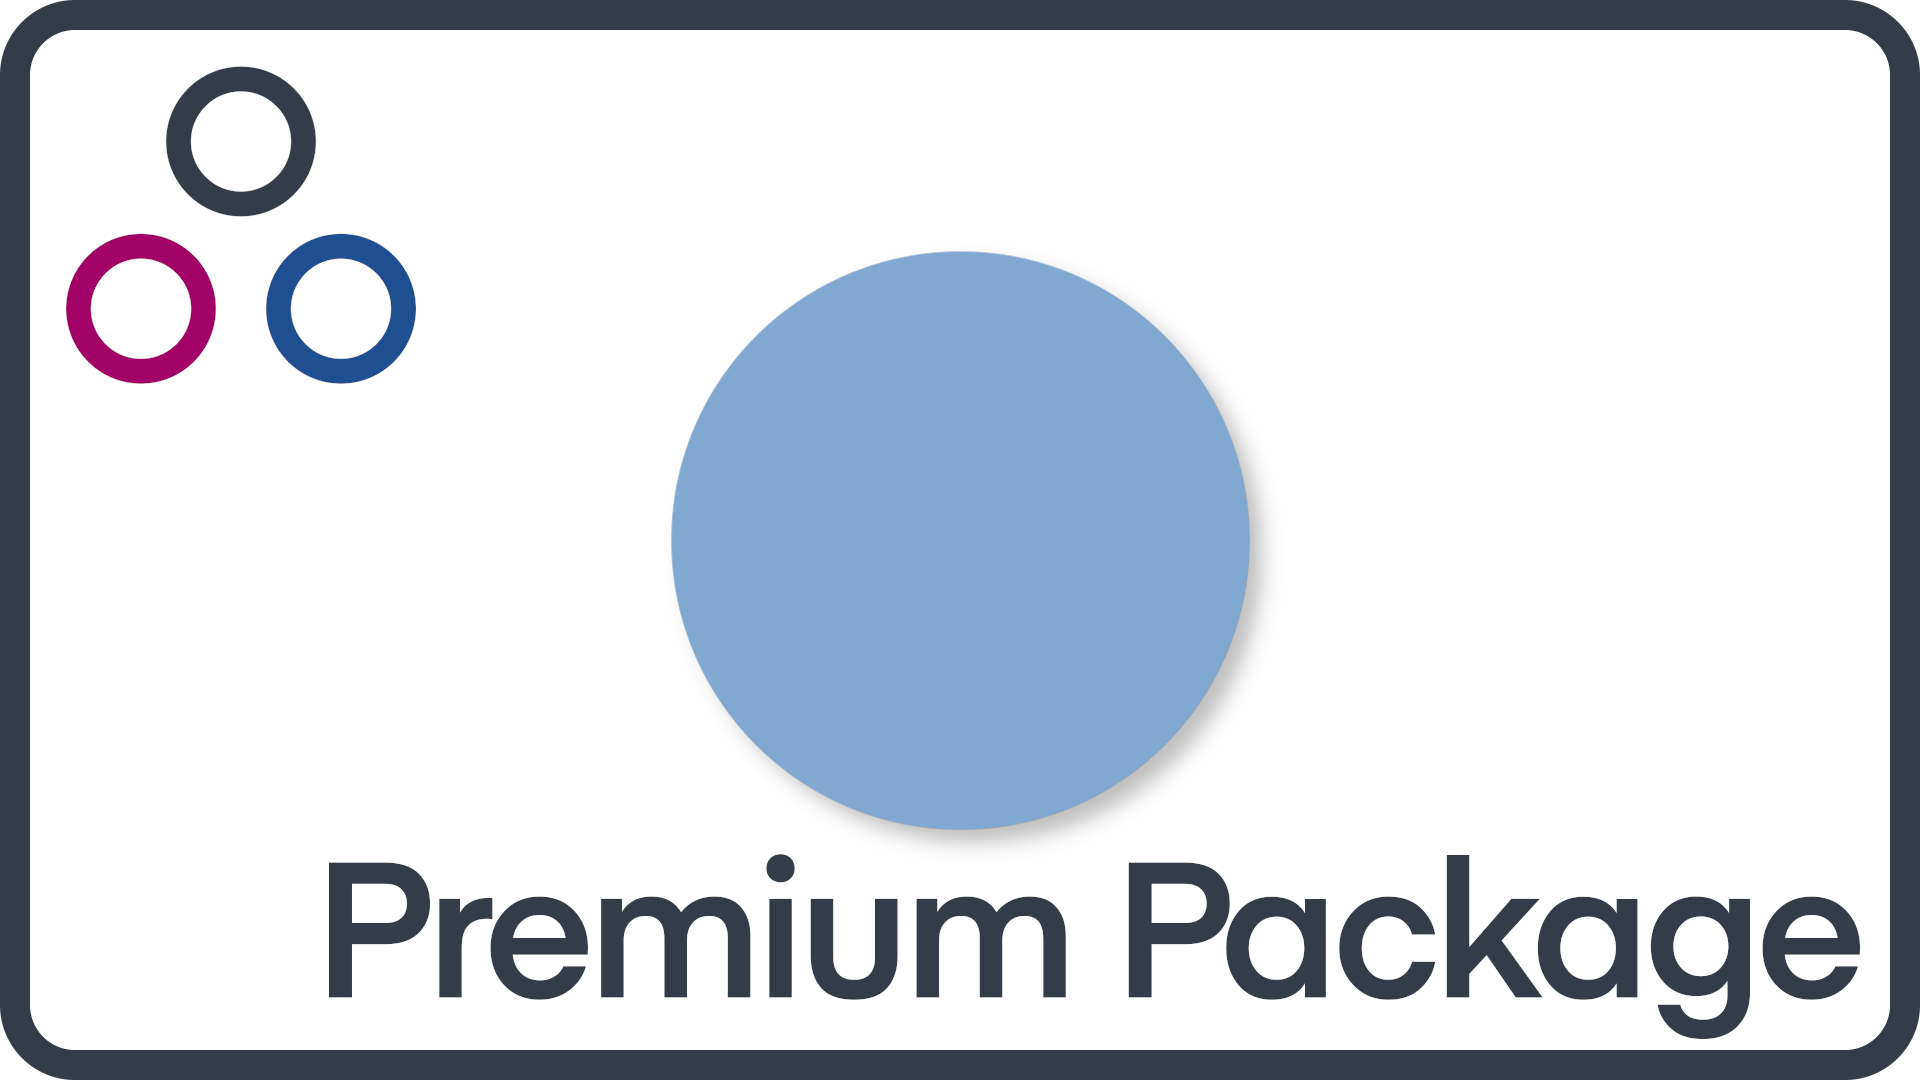 mattero Premium Package Launch